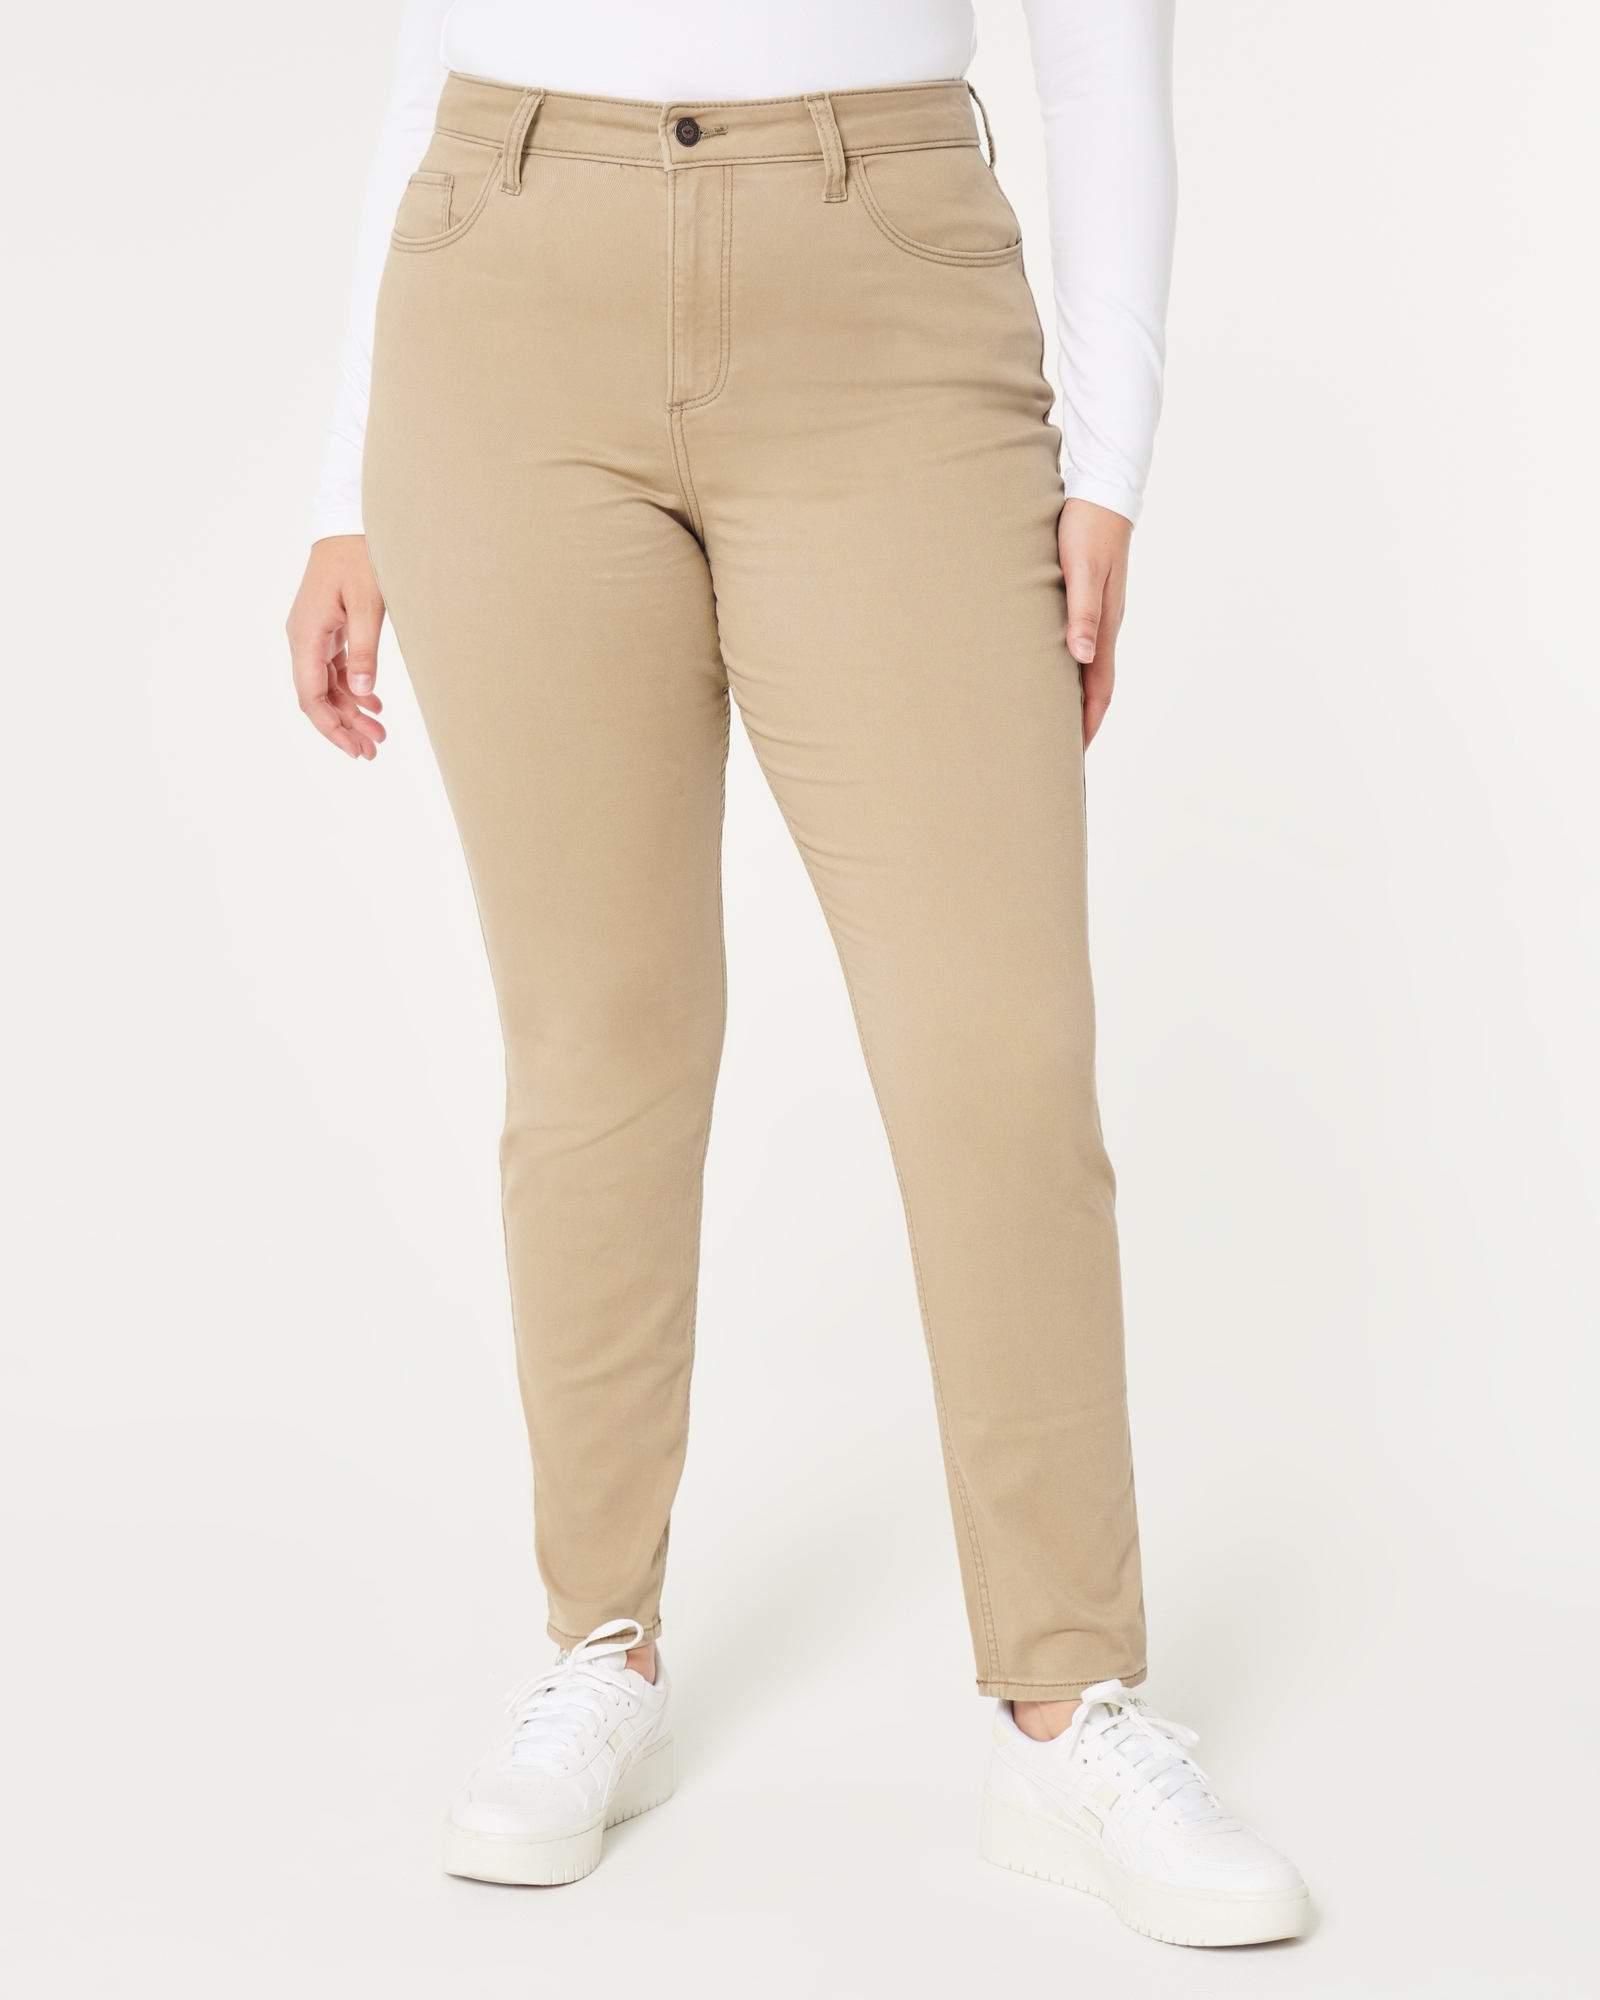 Women's Curvy High-Rise Khaki Super Skinny Pants